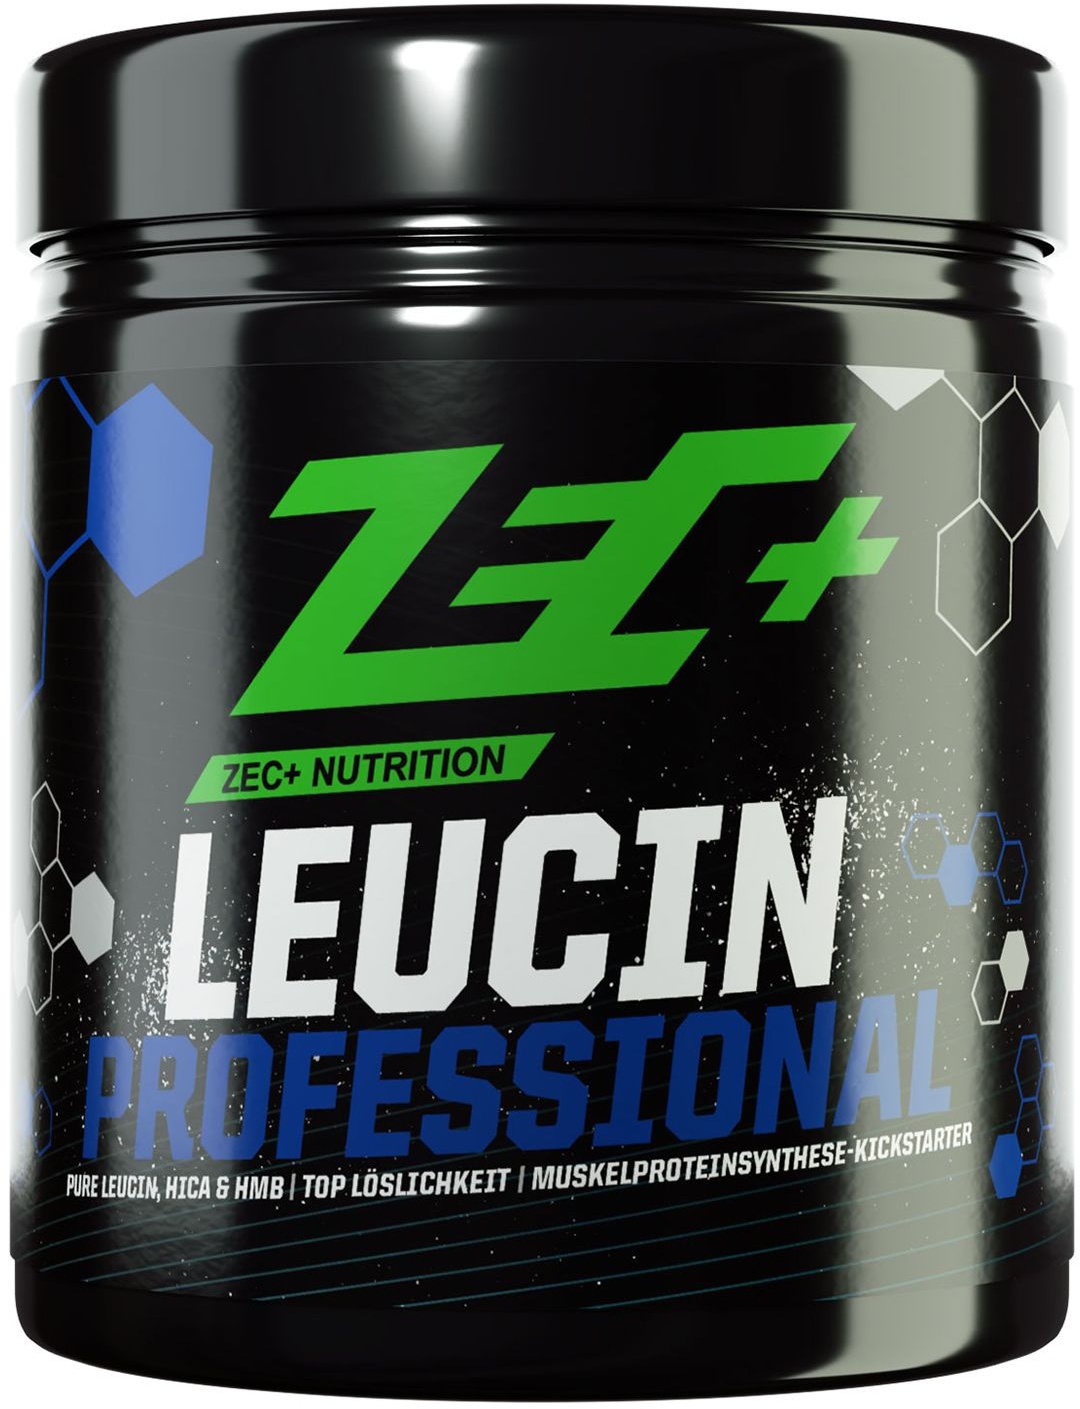 Zec+ Leucin Professional Pulver Cola 270 g